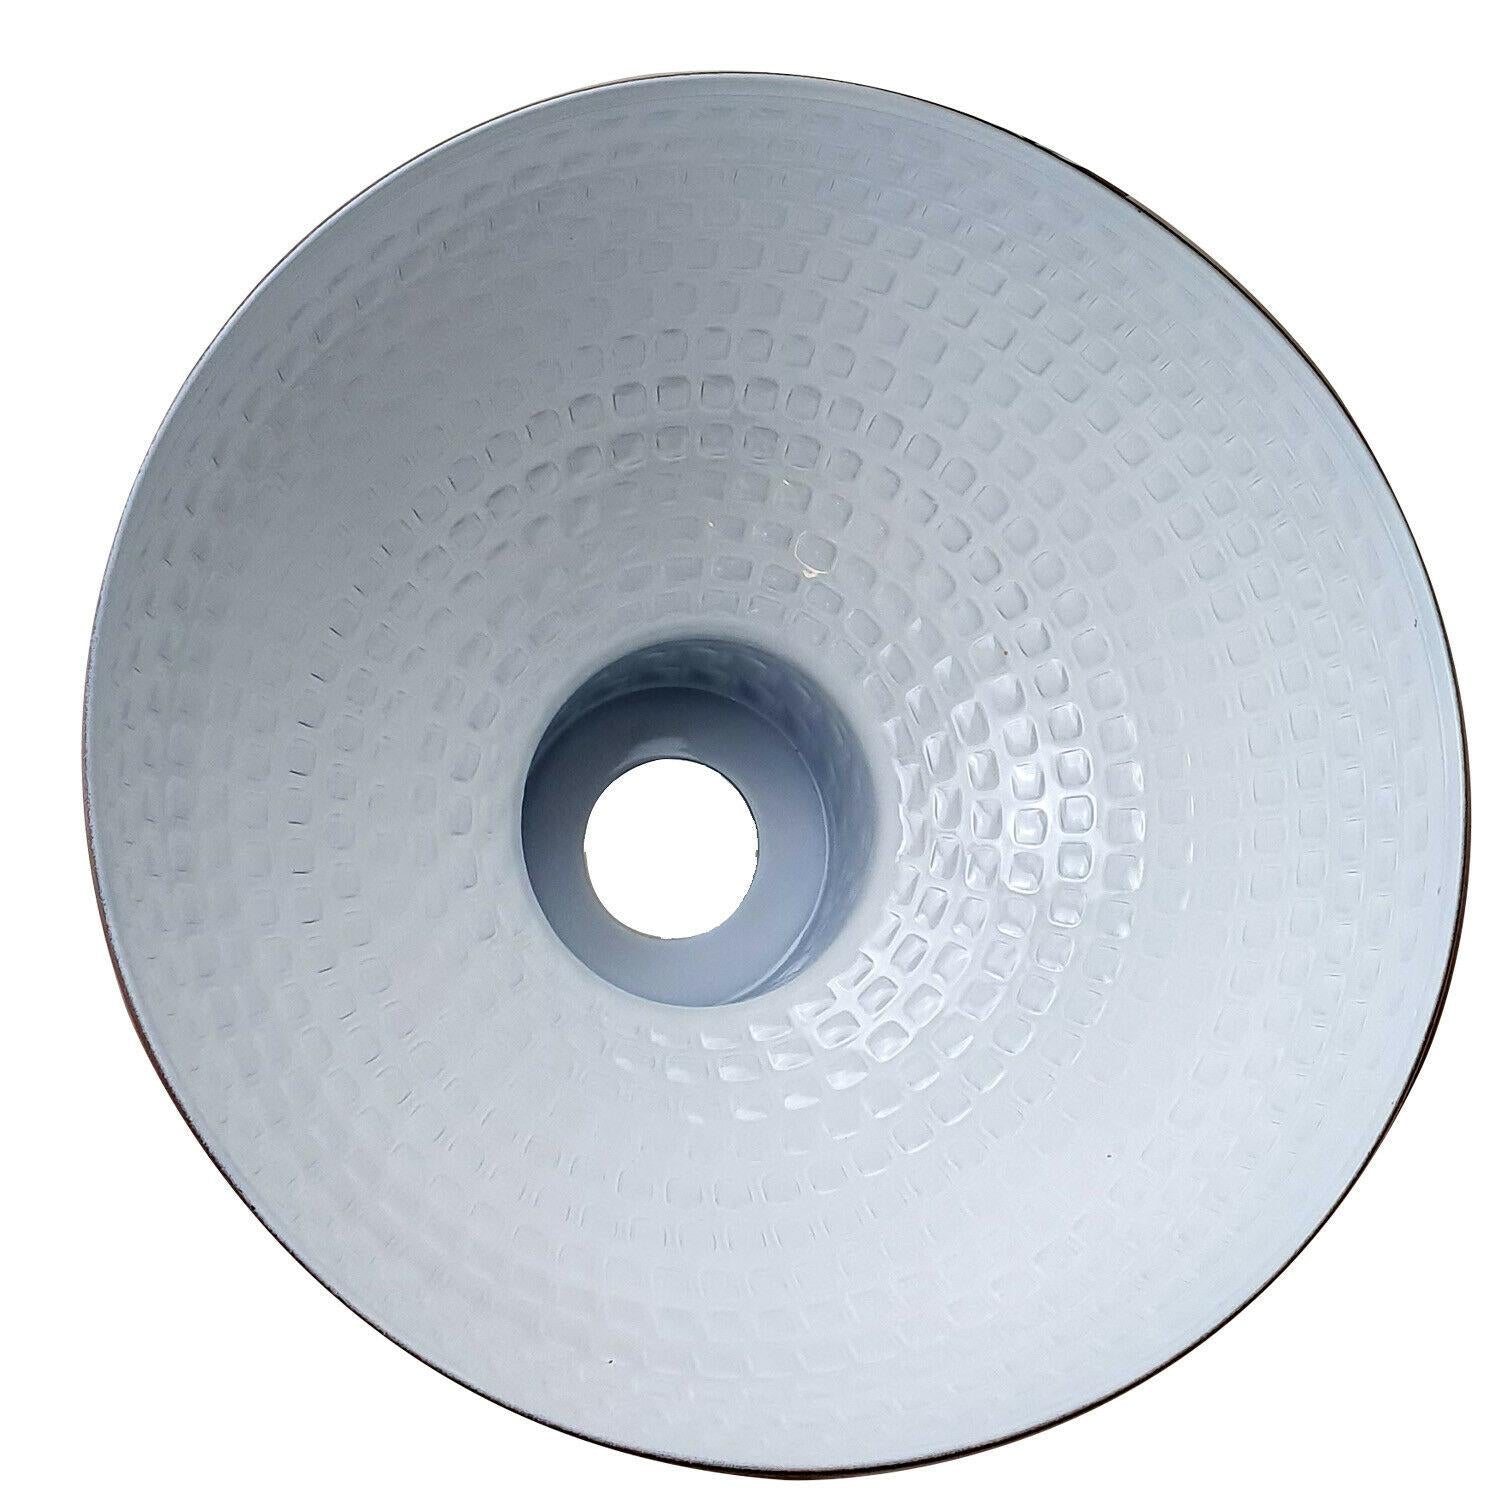 260mm Dome Retro Light Shade Easy Fit Pendant Lampshade~1397 - LEDSone UK Ltd